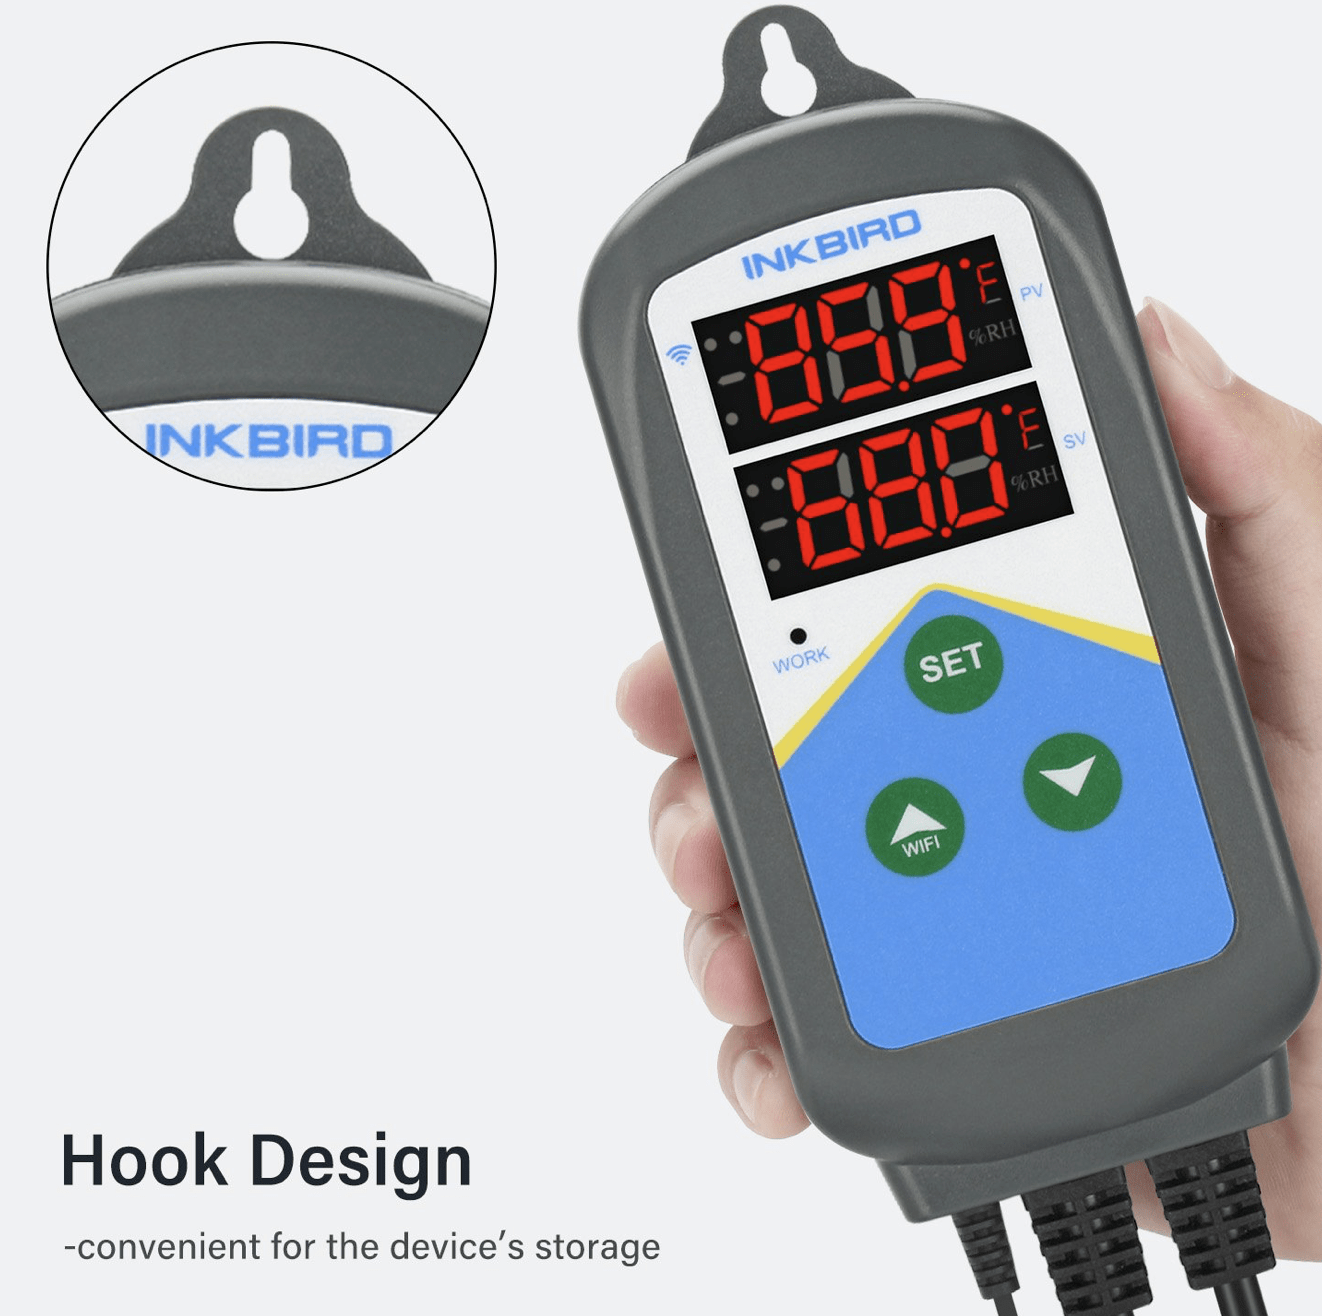 Inkbird ITC-308-WiFi Digitaler Temperaturregler / Thermostat mit Fühler –